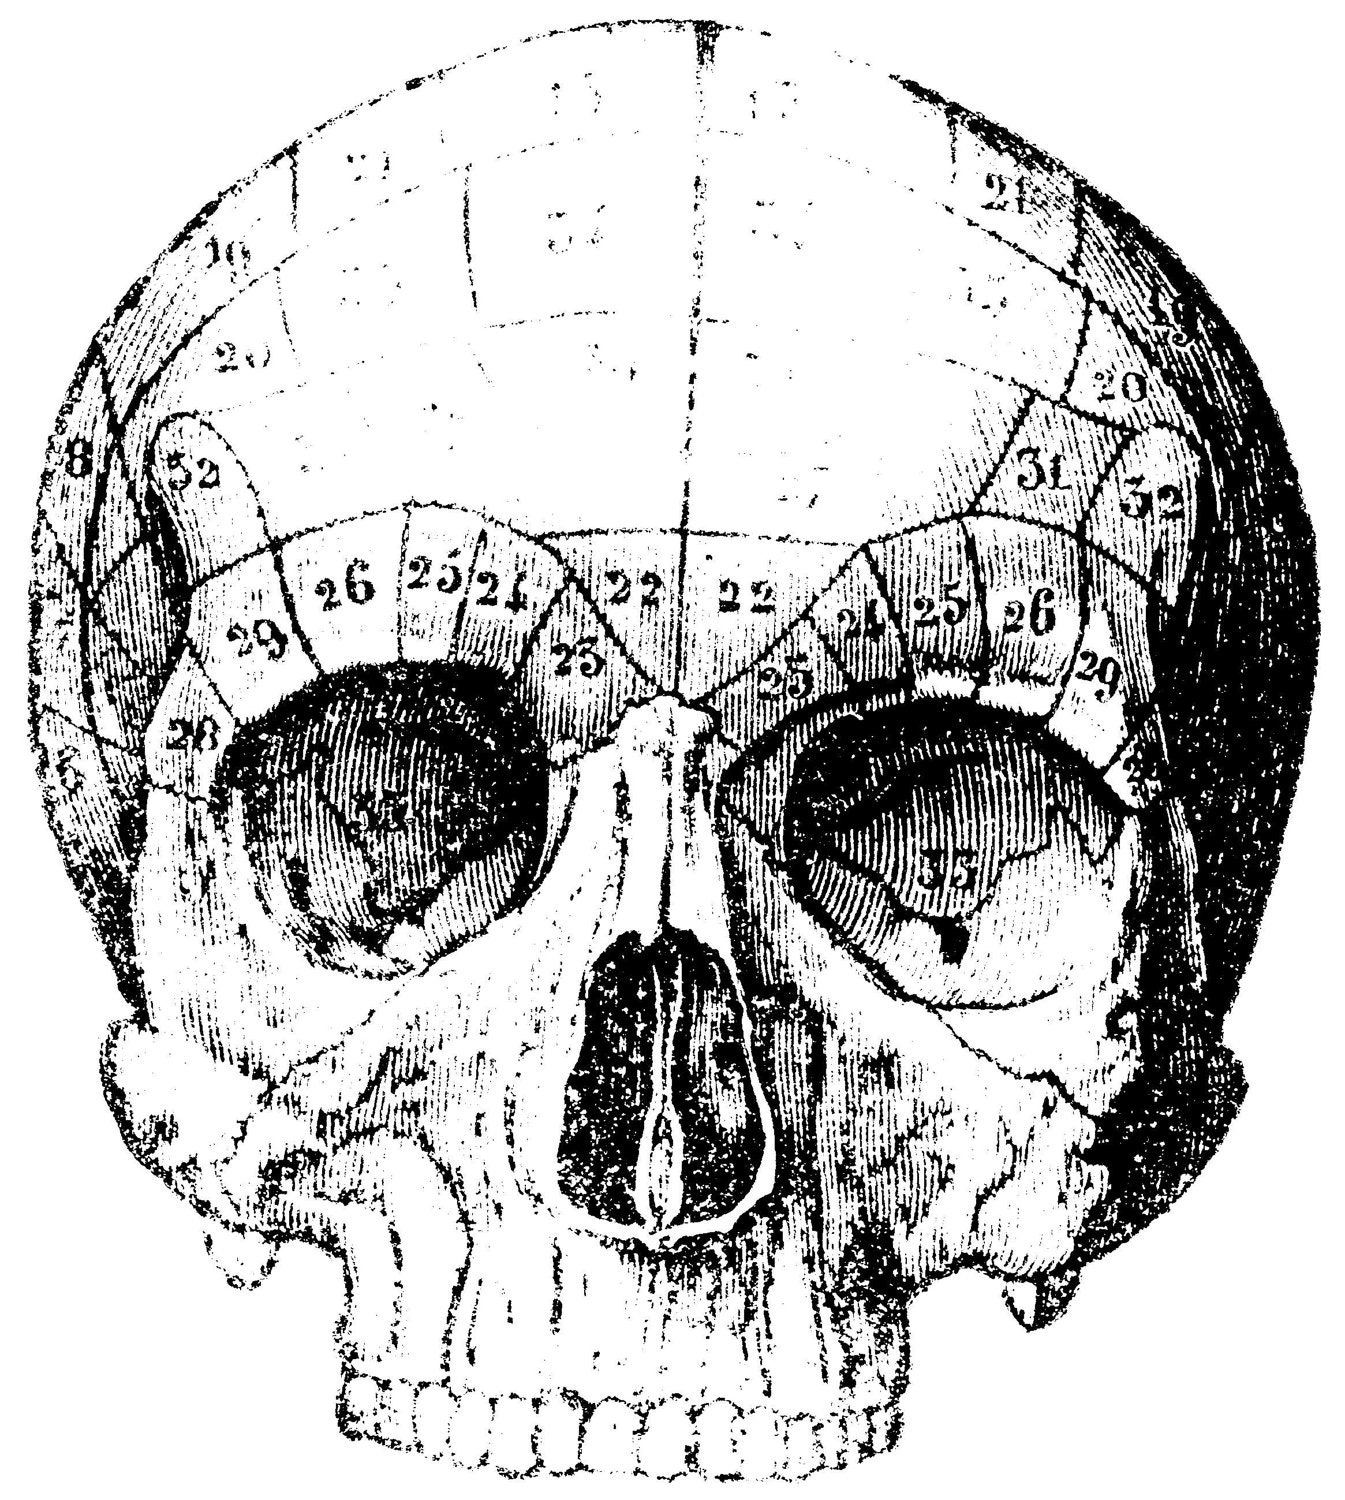 The human skull real skull Human Anatomy Old medical atlas